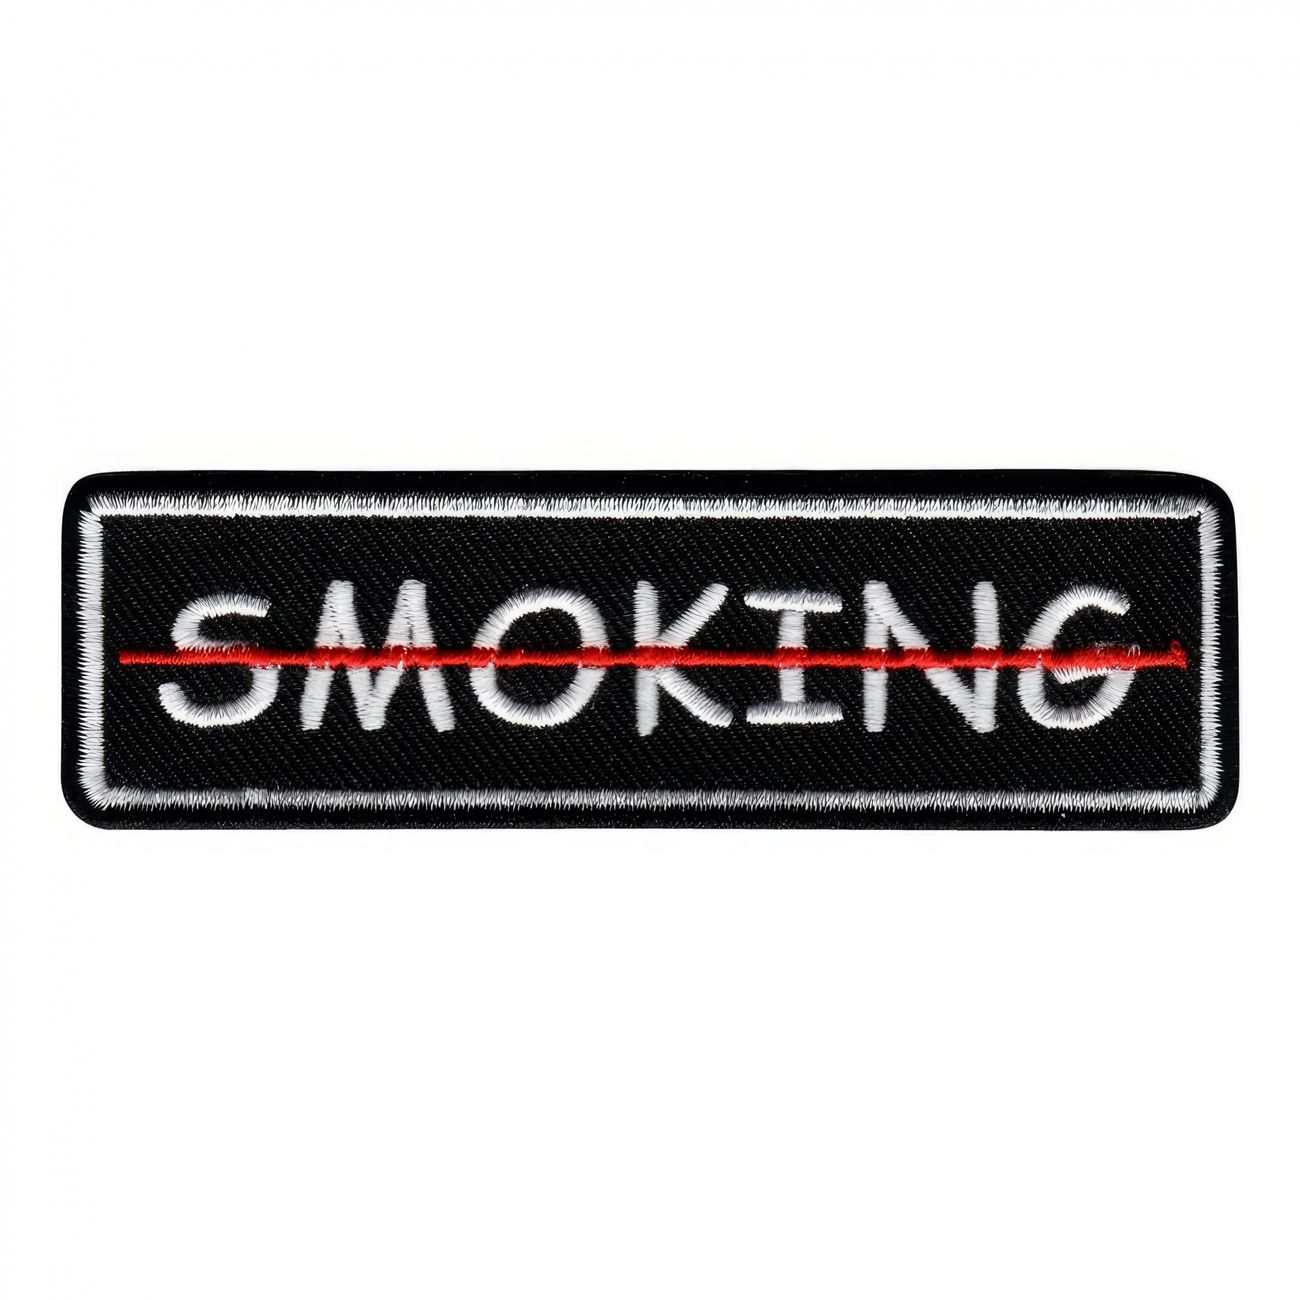 tygmarke-no-smoking-c-94345-1